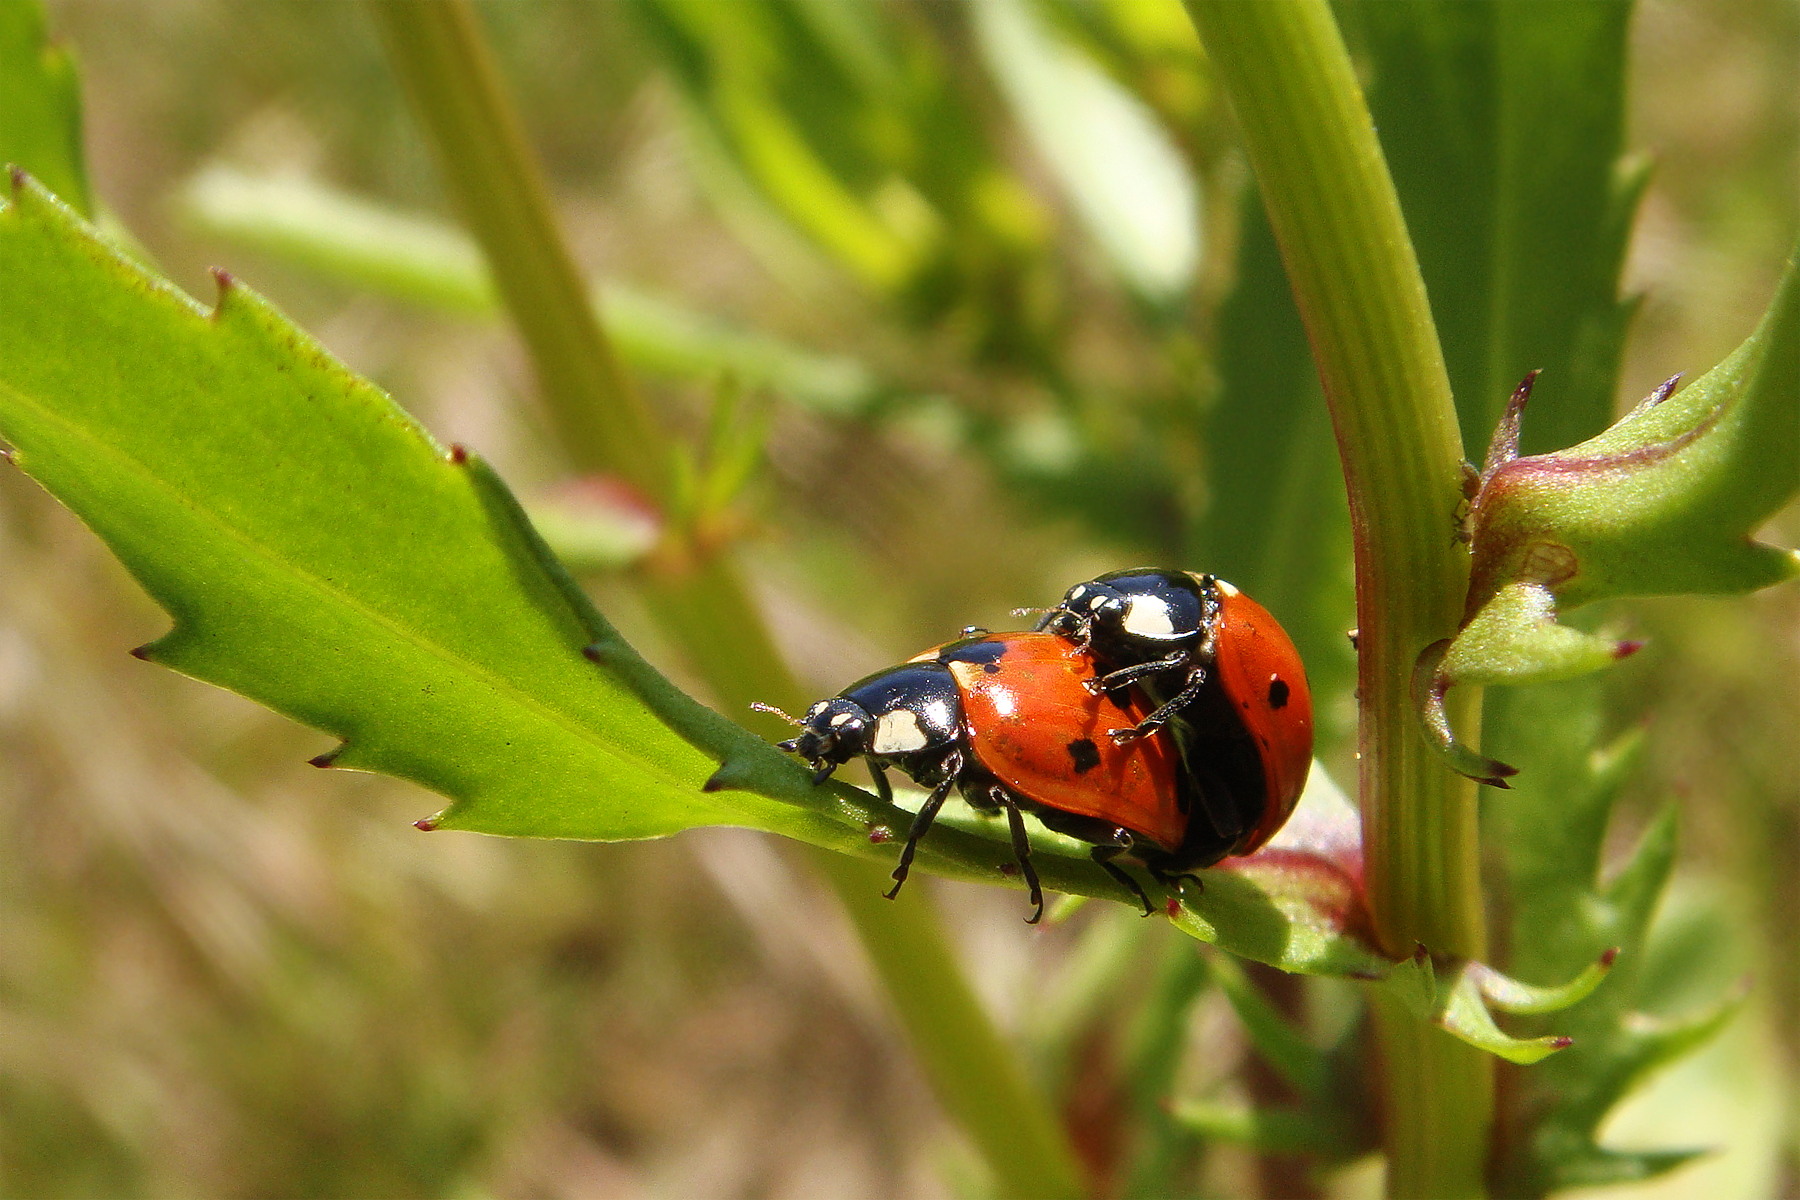 7-spot ladybug